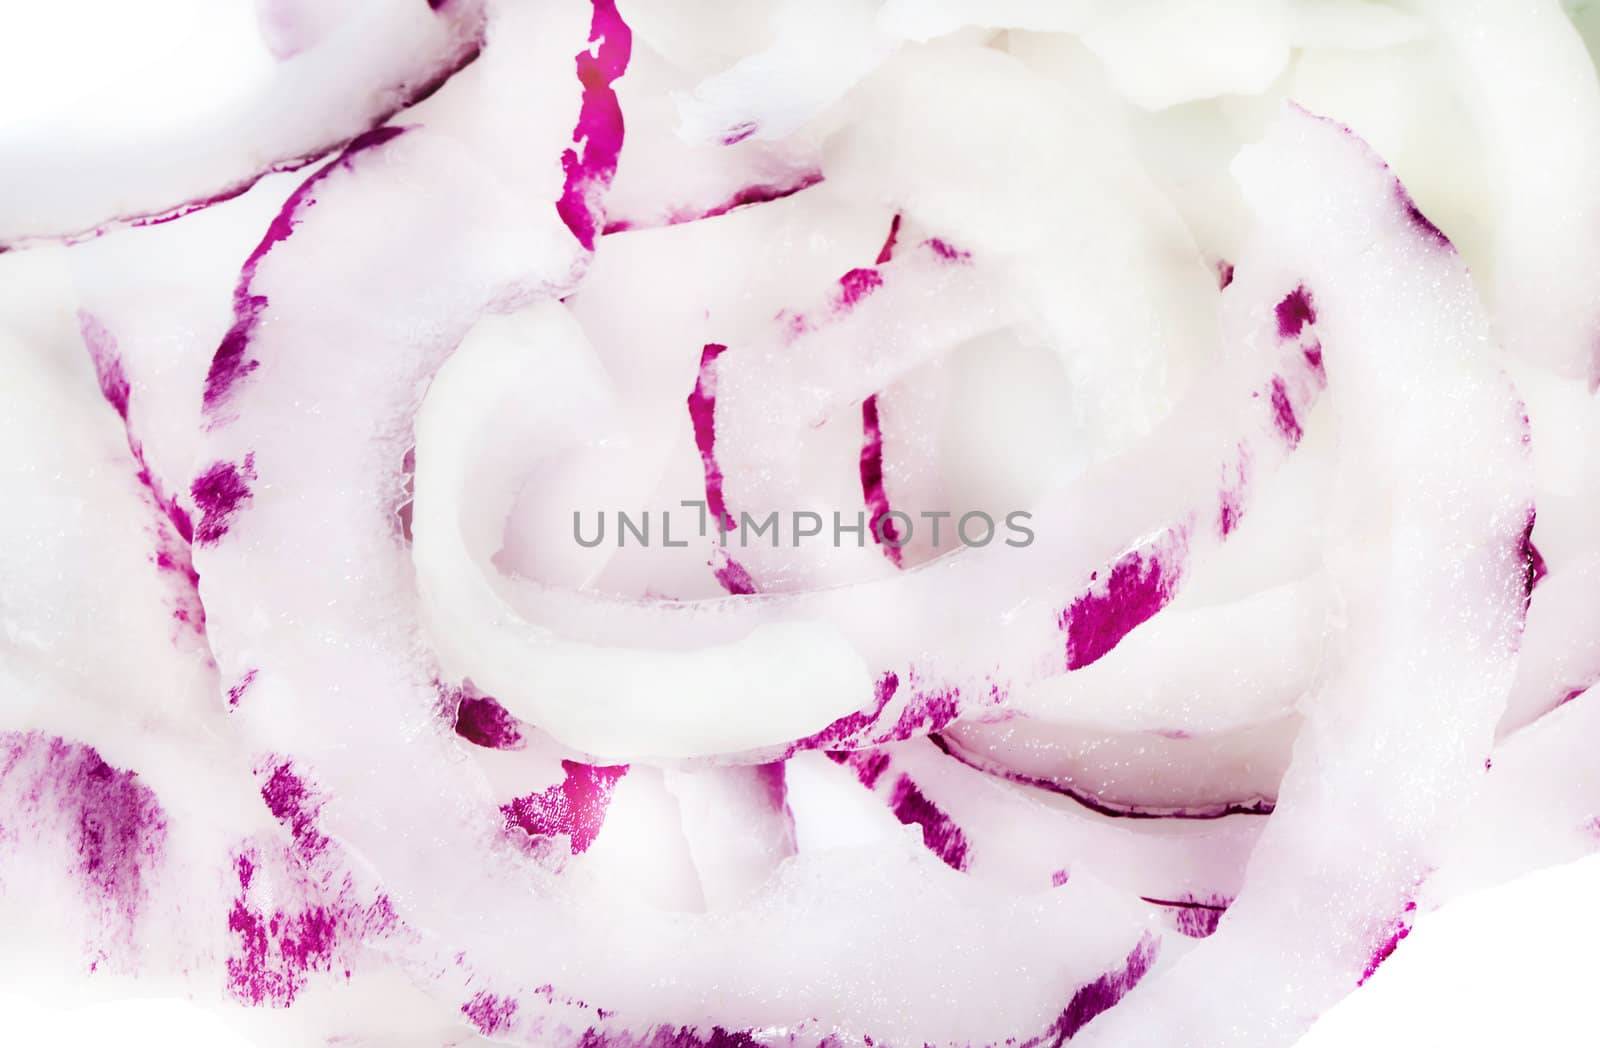 Purple onion rings by RawGroup